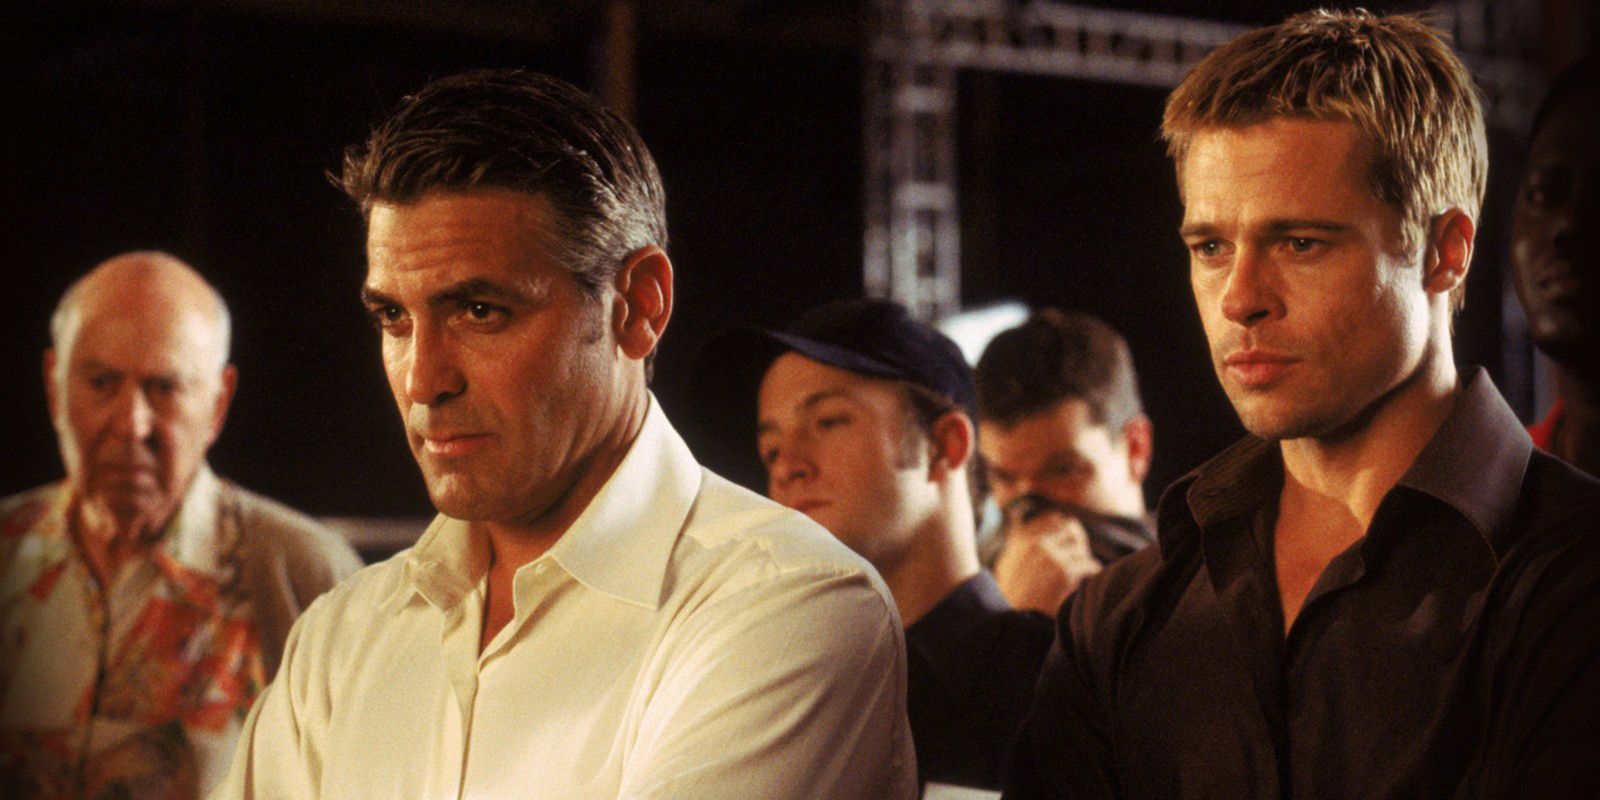 Brad Pitt Movies 10 HighestGrossing Movies Ranked According To Box Office Mojo